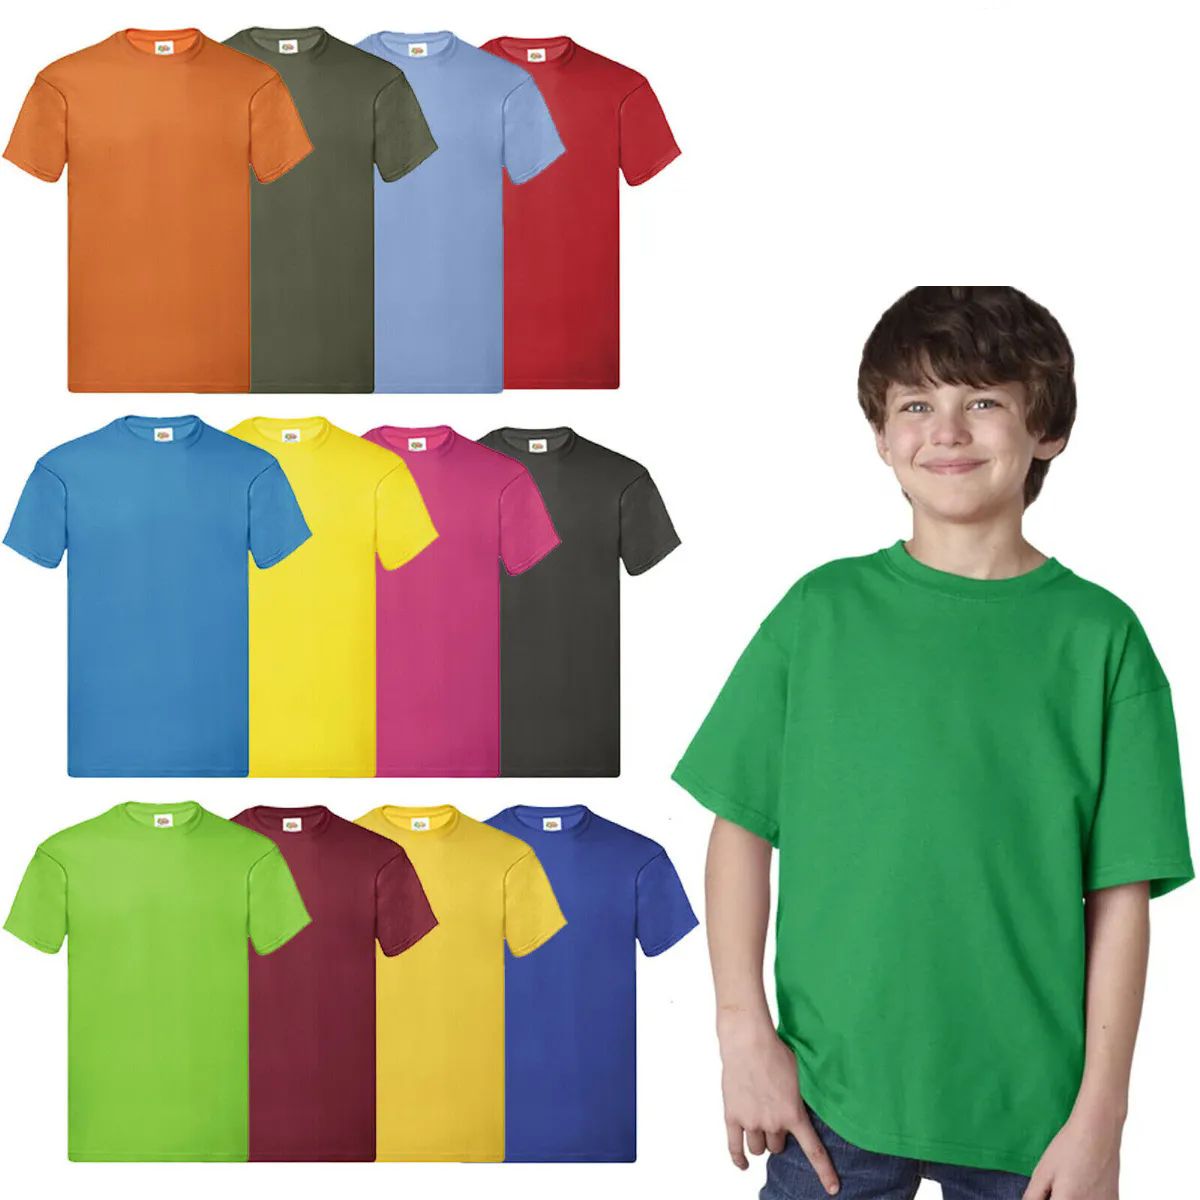 144 Bulk Billion Hats Kids Youth Cotton Assorted Colors T Shirts Size xs